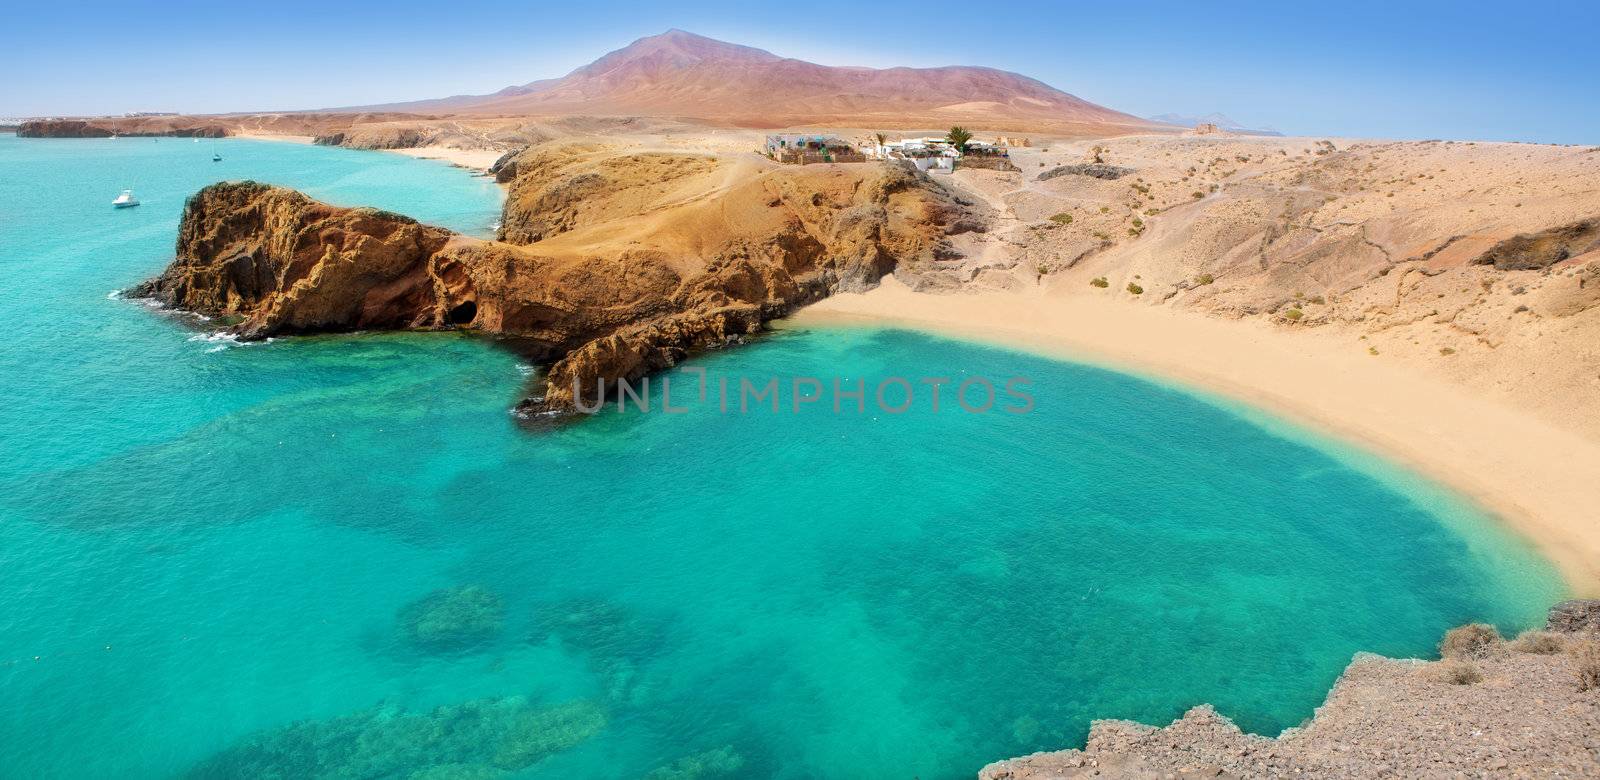 Lanzarote Papagayo turquoise beach and Ajaches by lunamarina